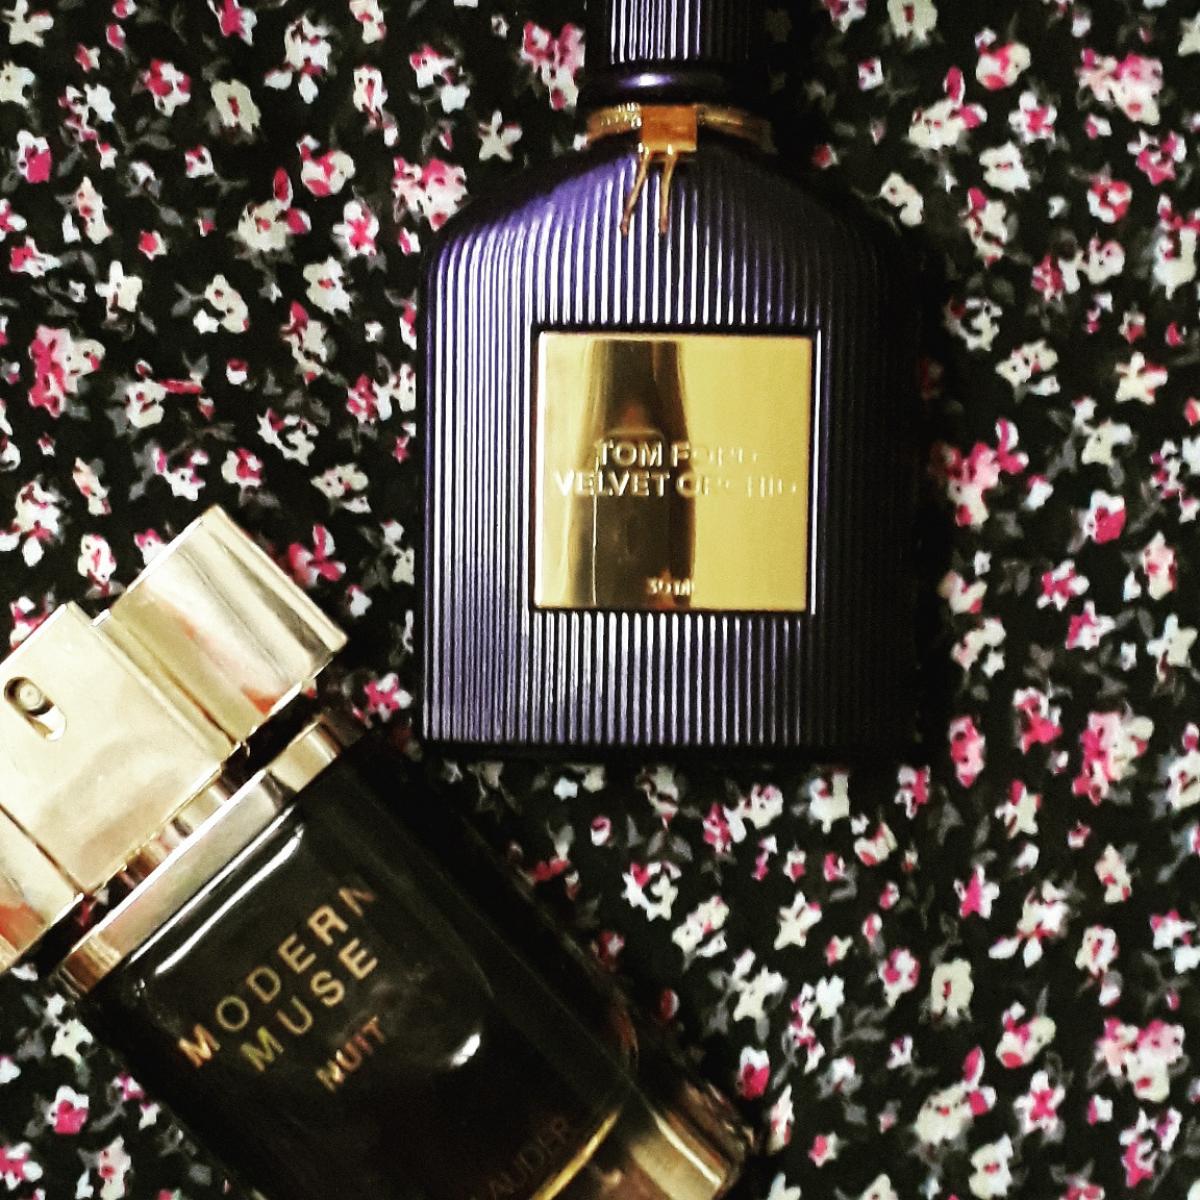 Modern Muse Nuit Estée Lauder perfume - a fragrance for women 2016